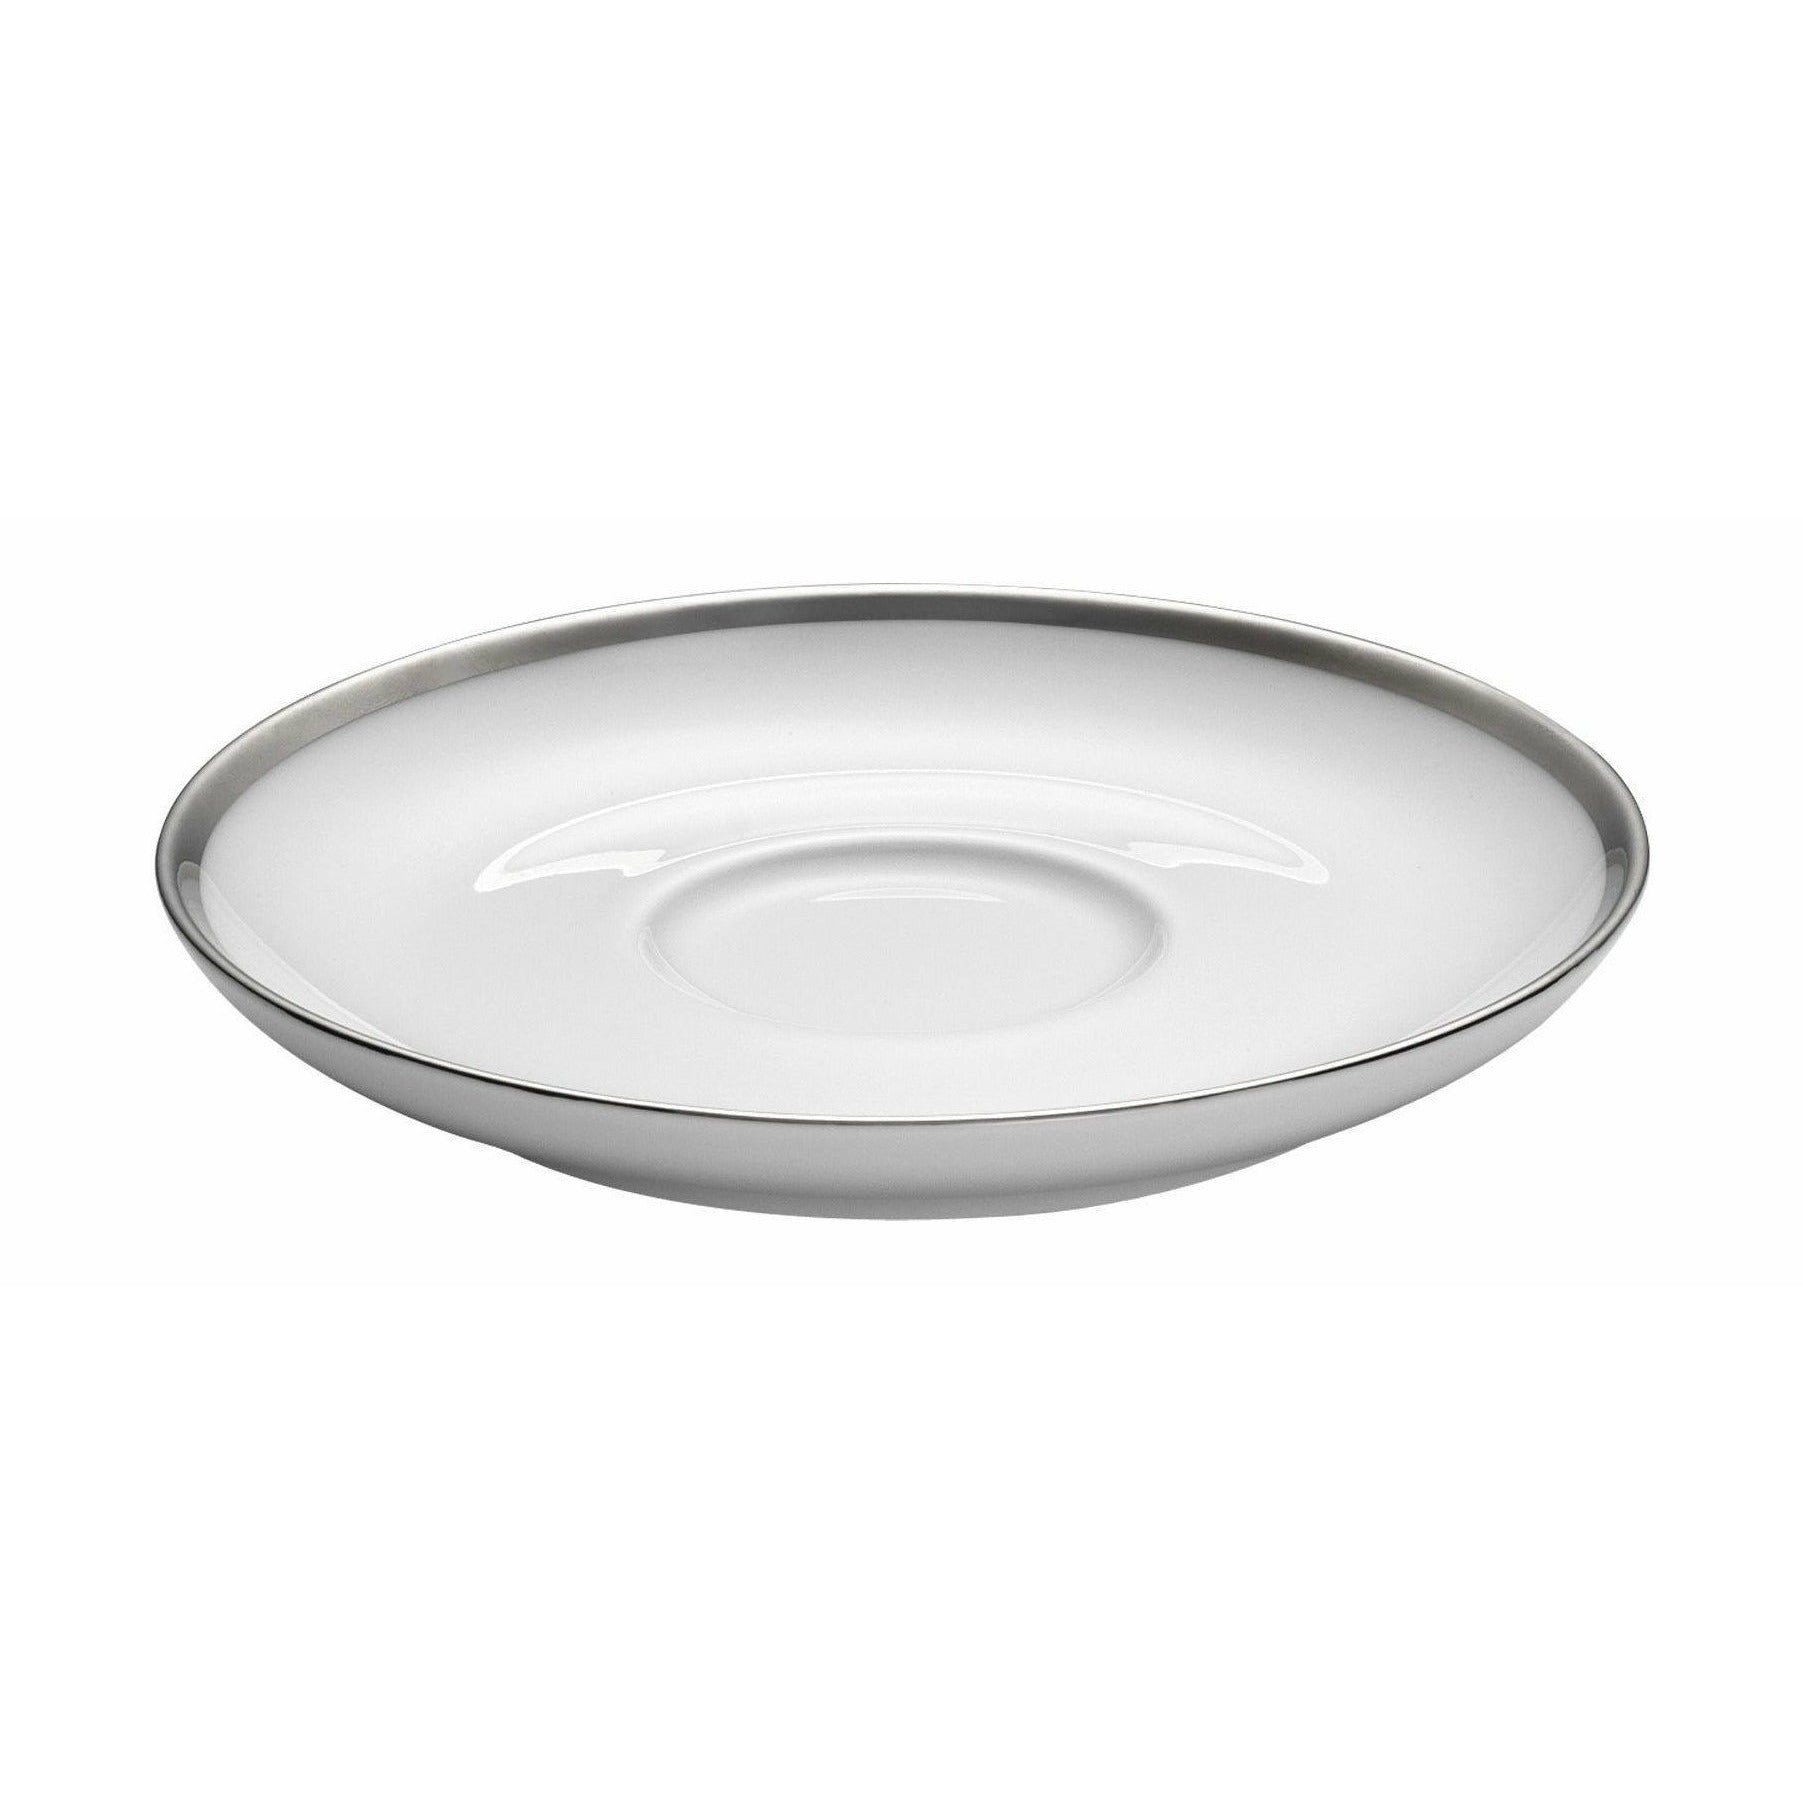 Pillivuyt Bistro -lautanen cecil, valkoinen/hopea